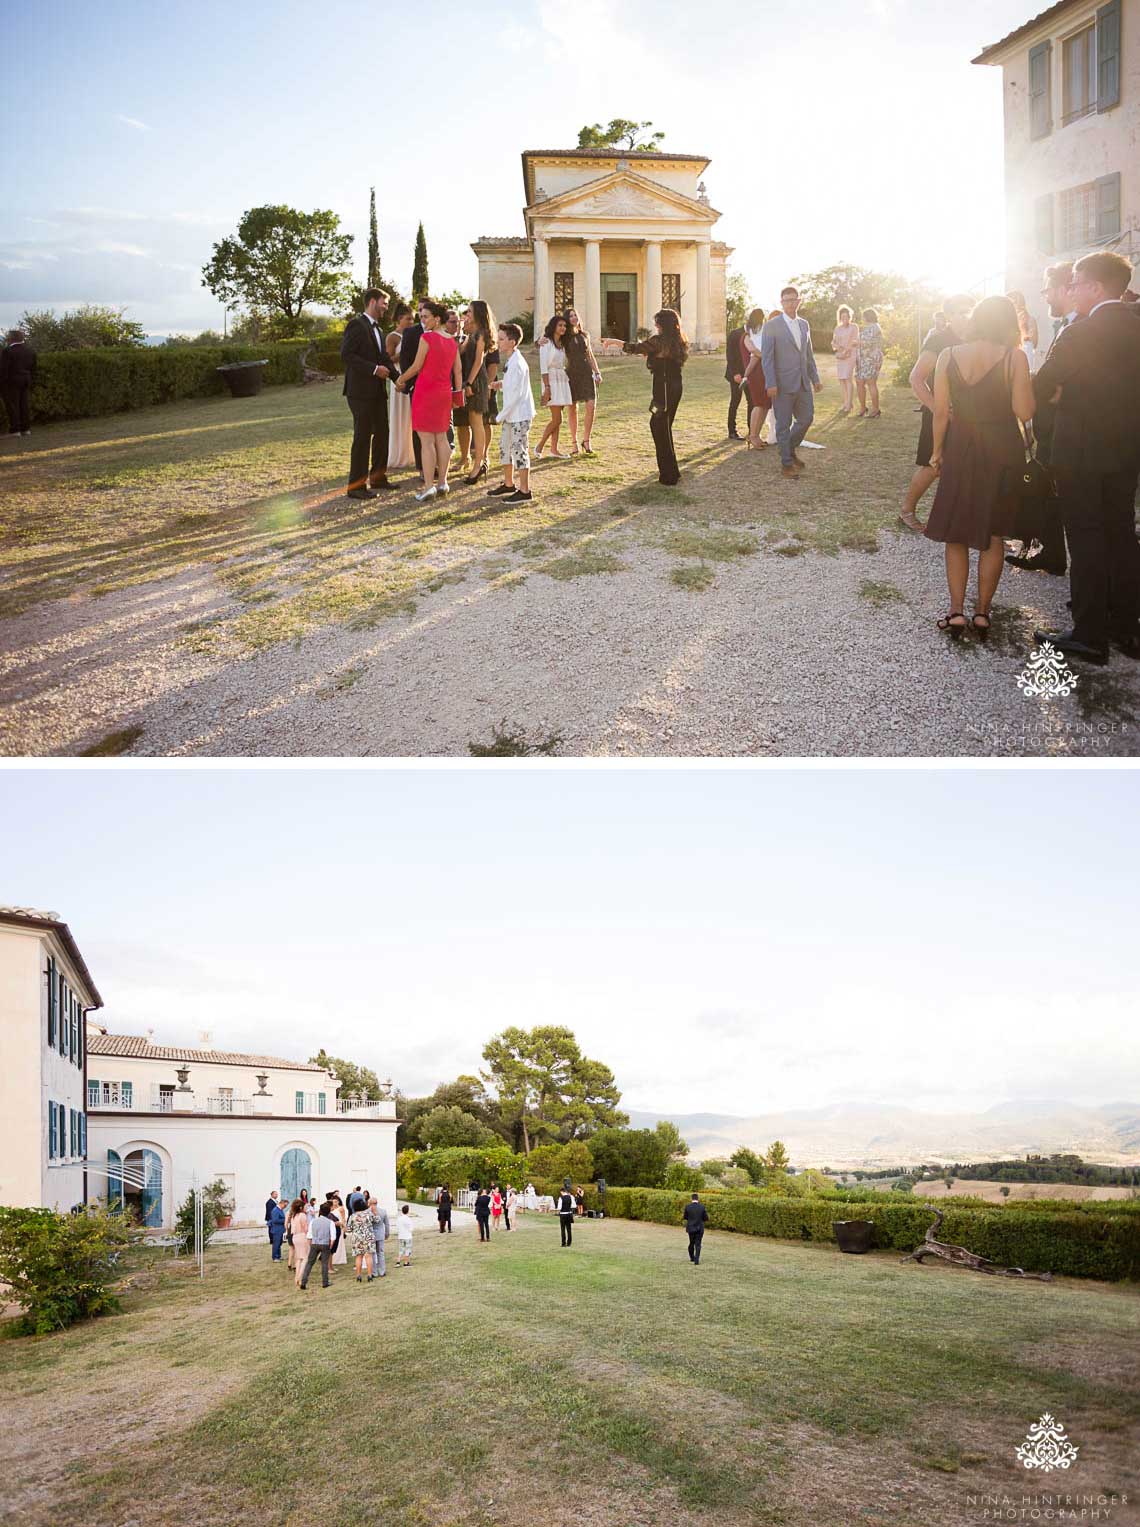 Villa Pianciani Wedding in Spoleto, Italy | Tuscany Wedding Photographer - Blog of Nina Hintringer Photography - Wedding Photography, Wedding Reportage and Destination Weddings